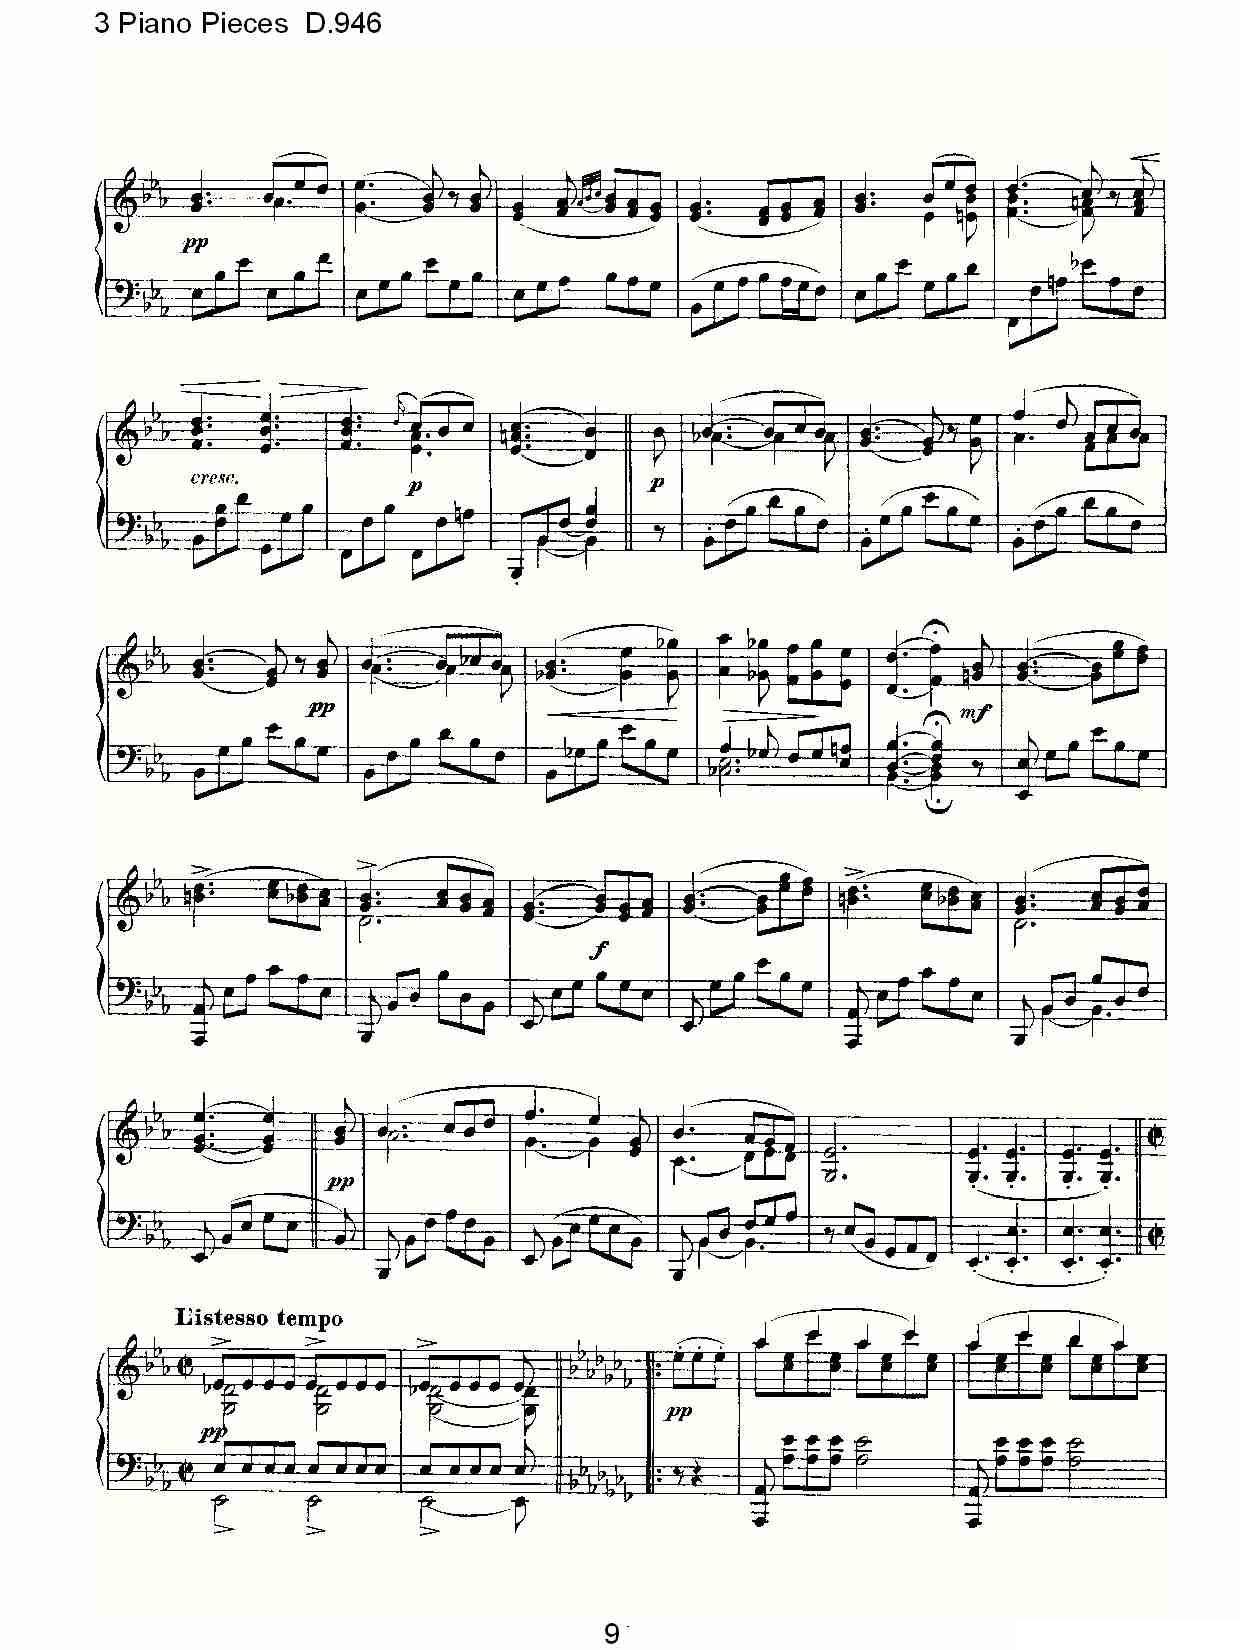 3 Piano Pieces D.946（钢琴三联奏D.946）钢琴曲谱（图9）